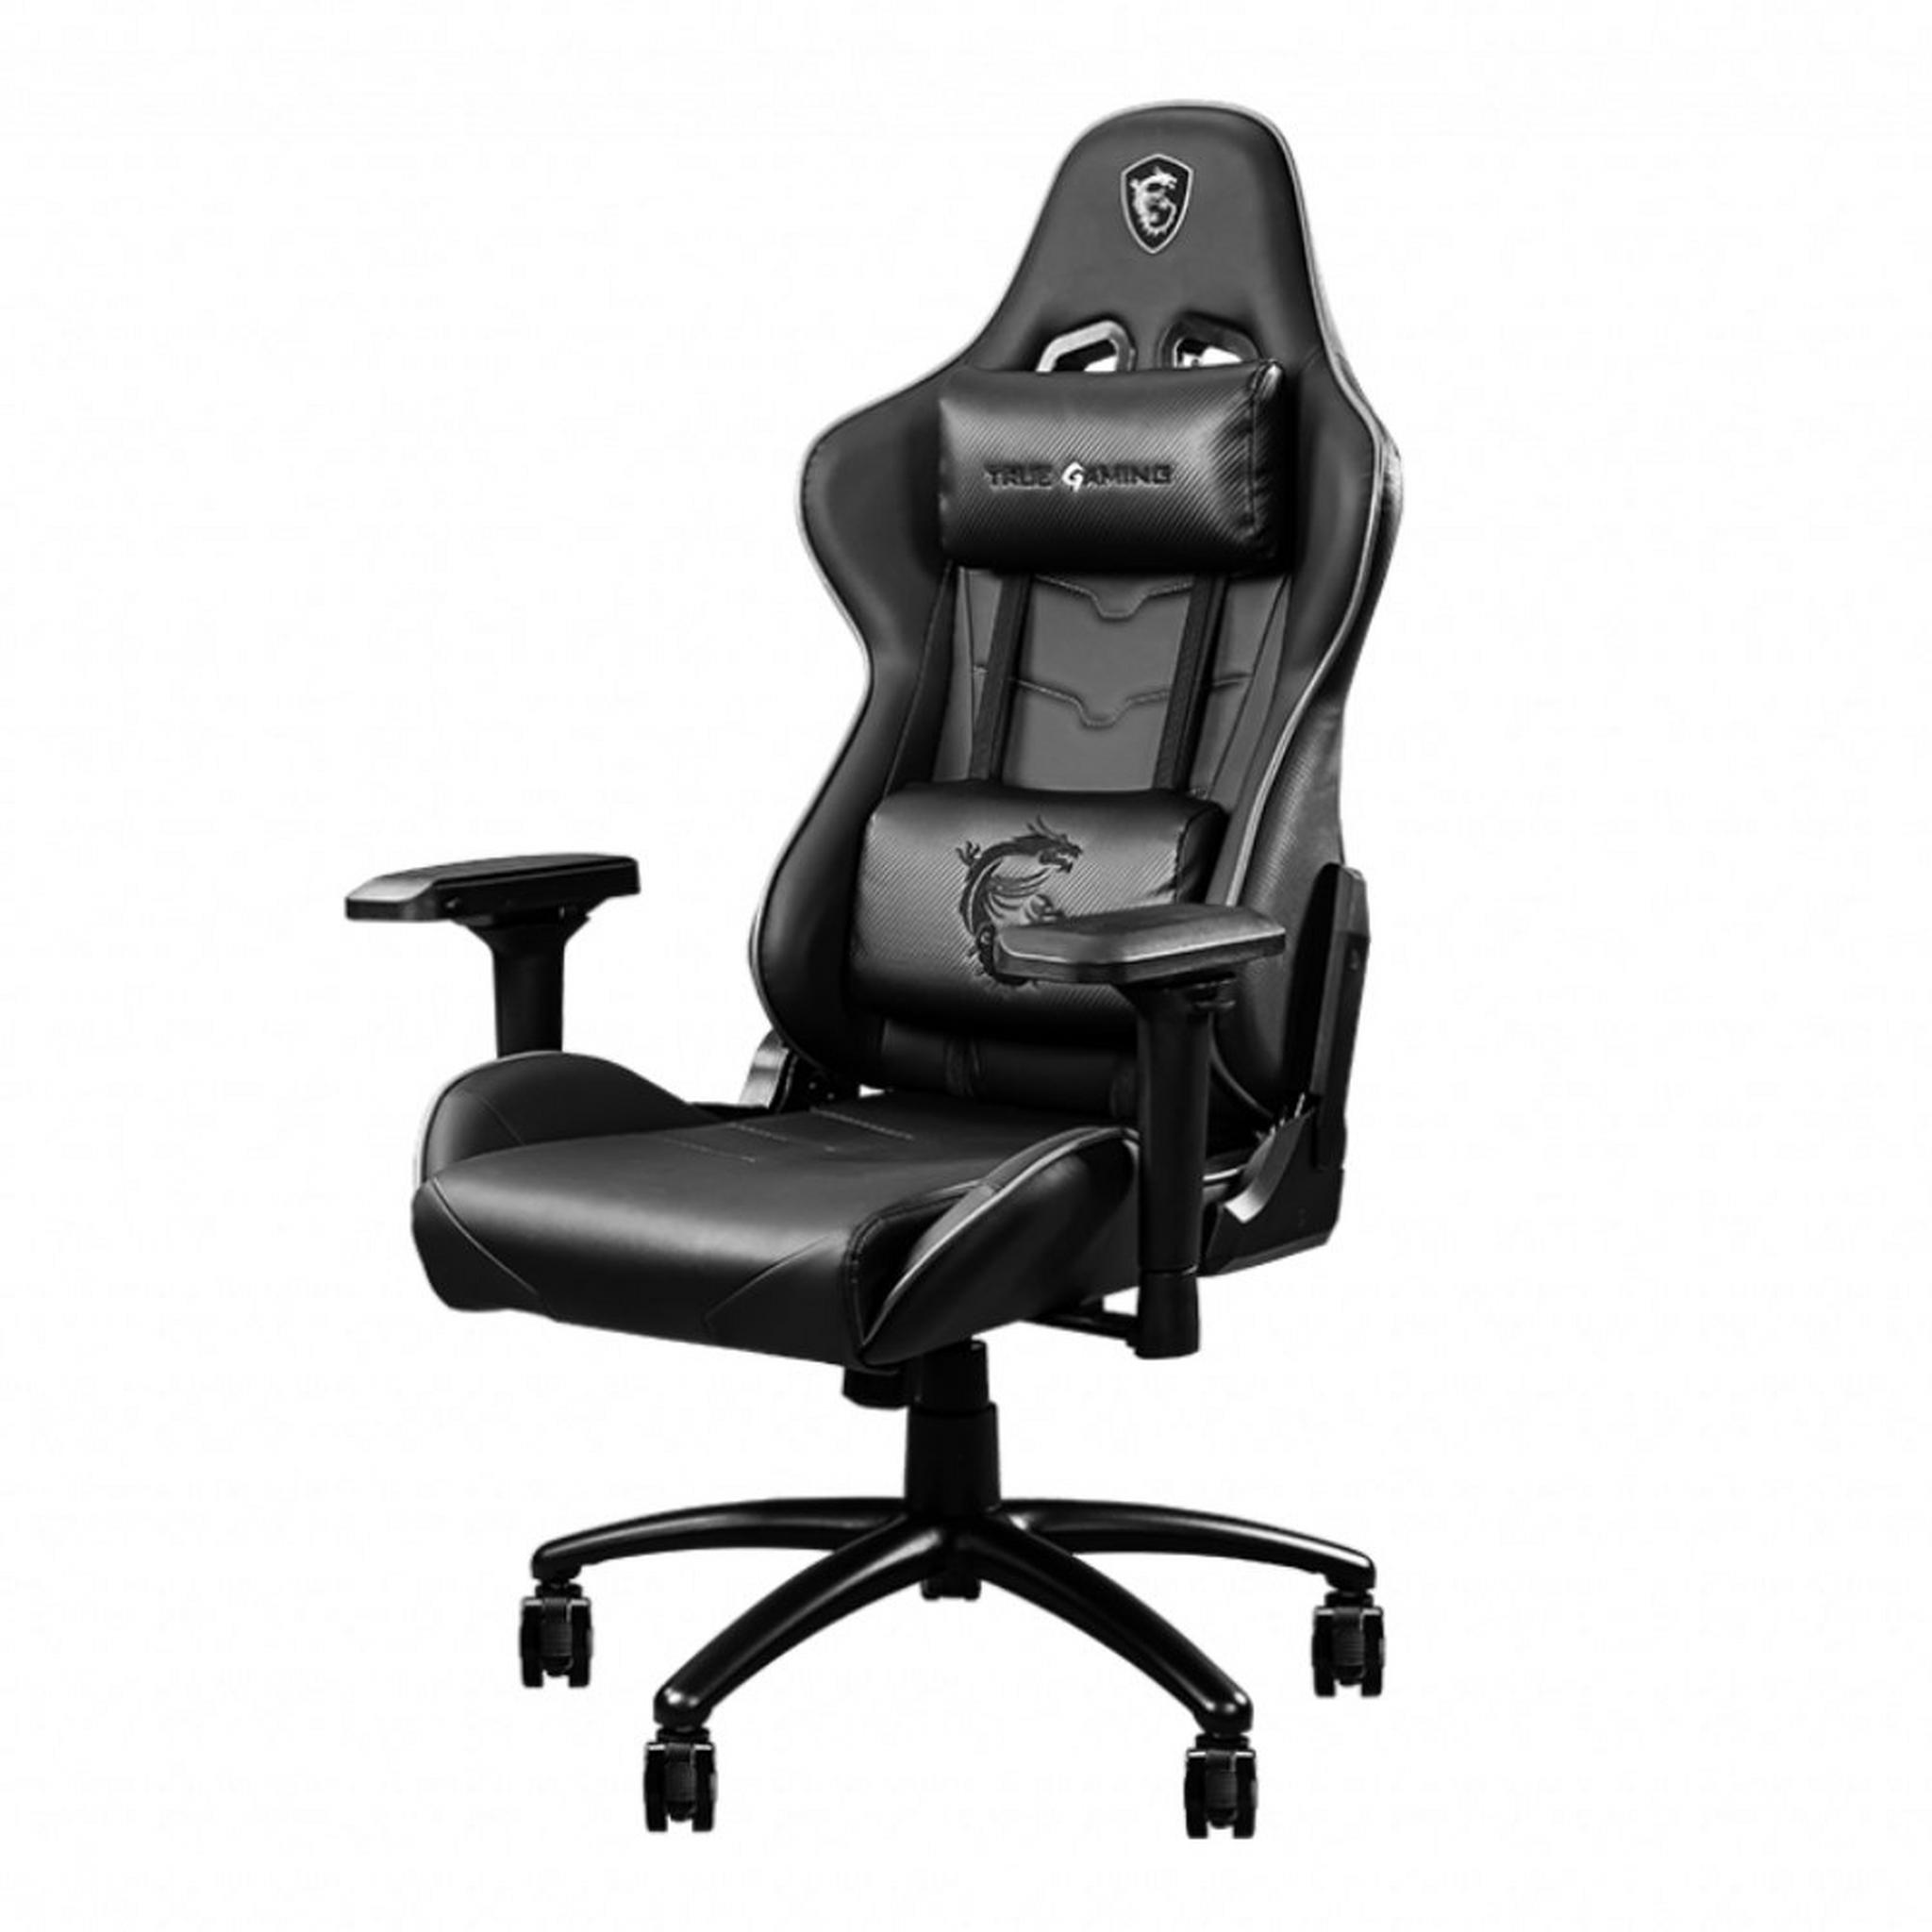 MSI MAG-CH120-I Gaming Chair - Black